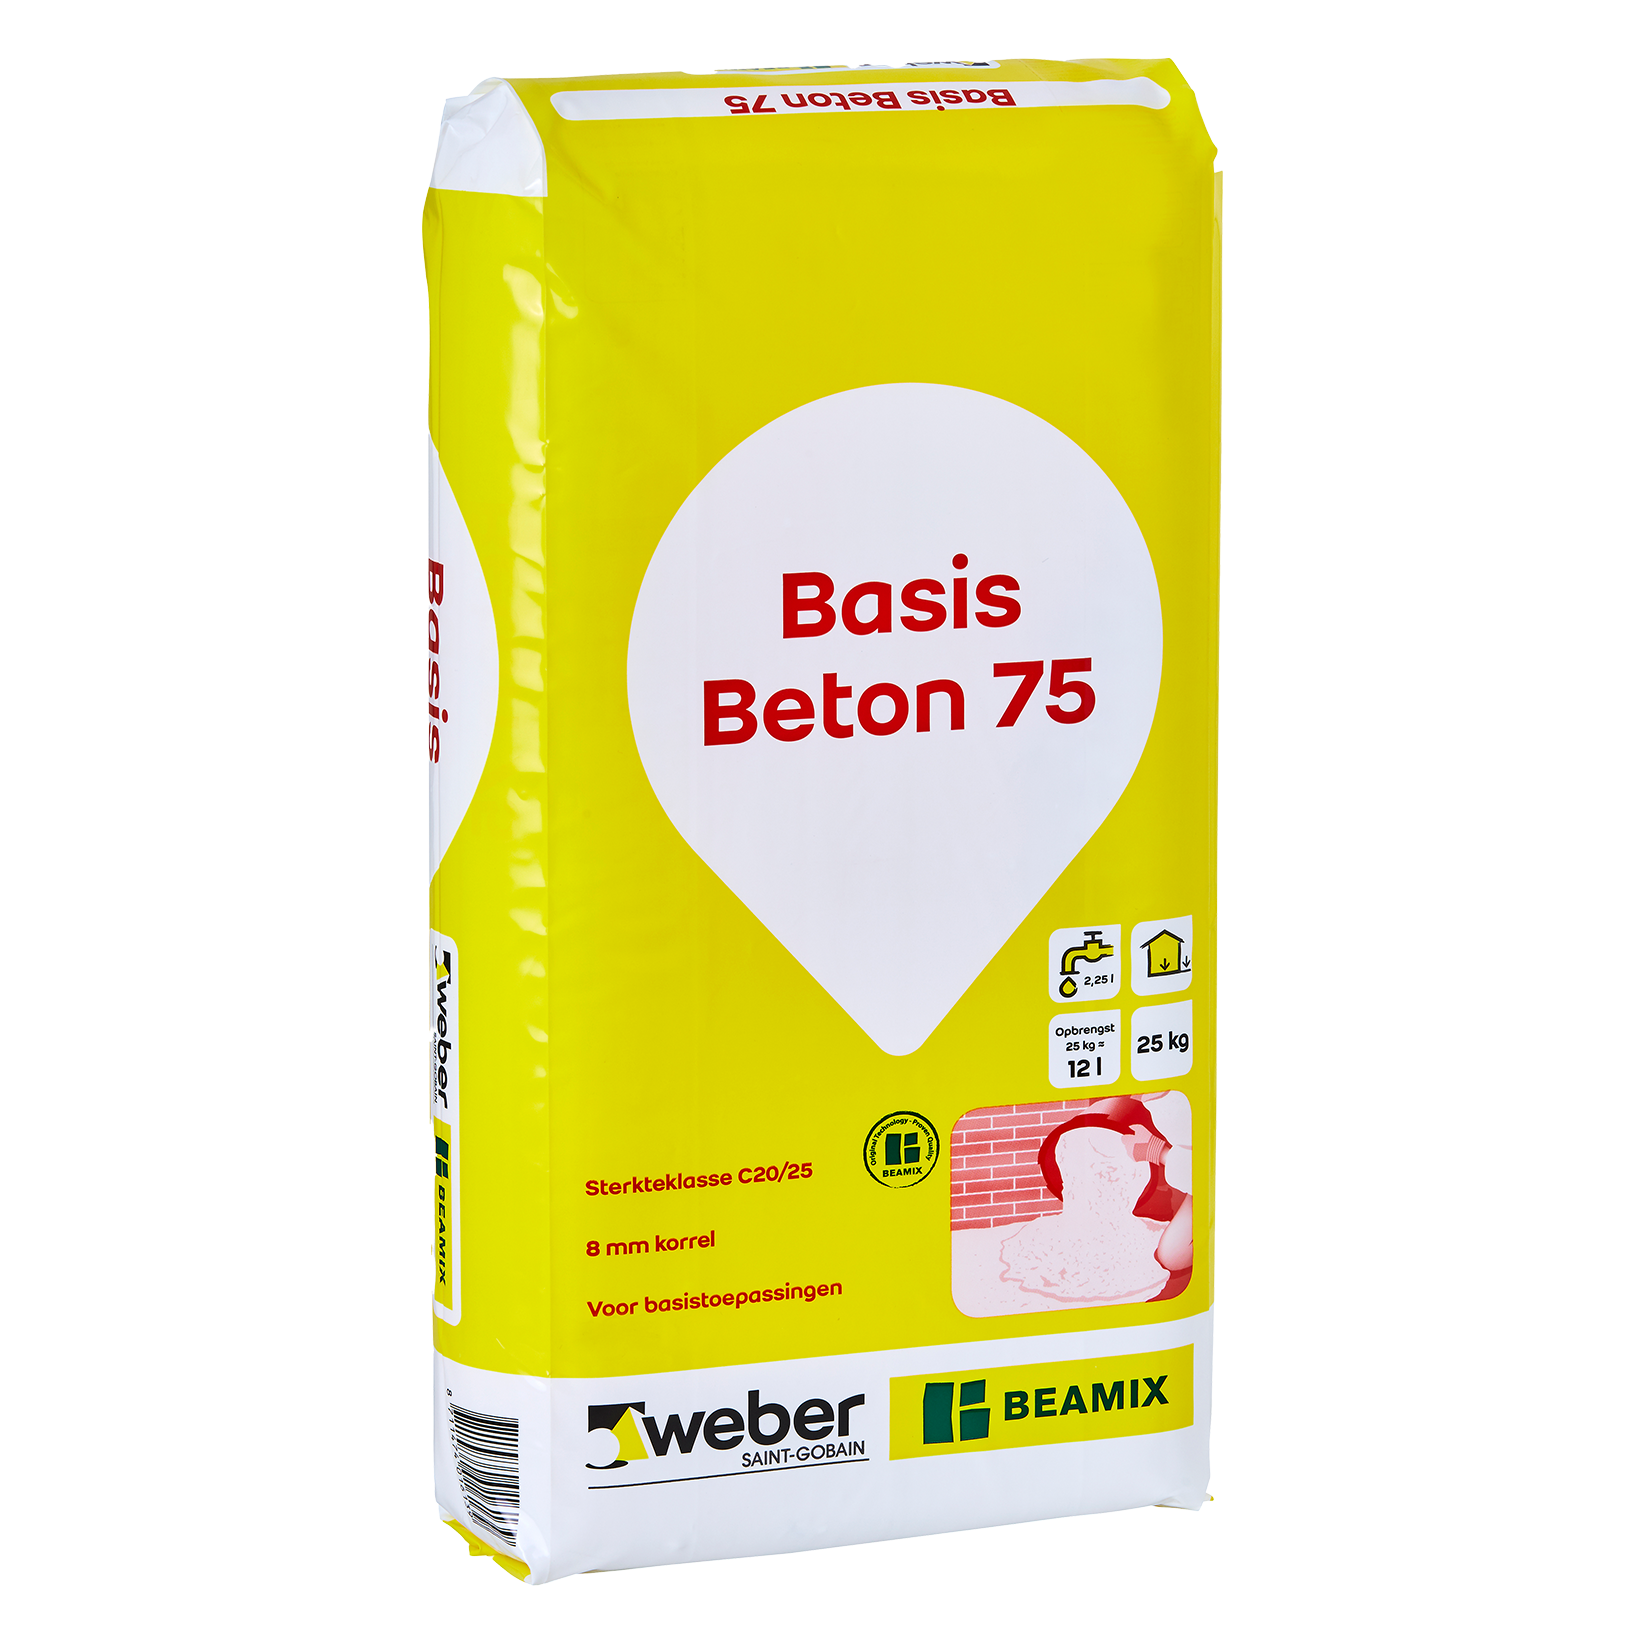 Weber Beamix Basis Beton 75